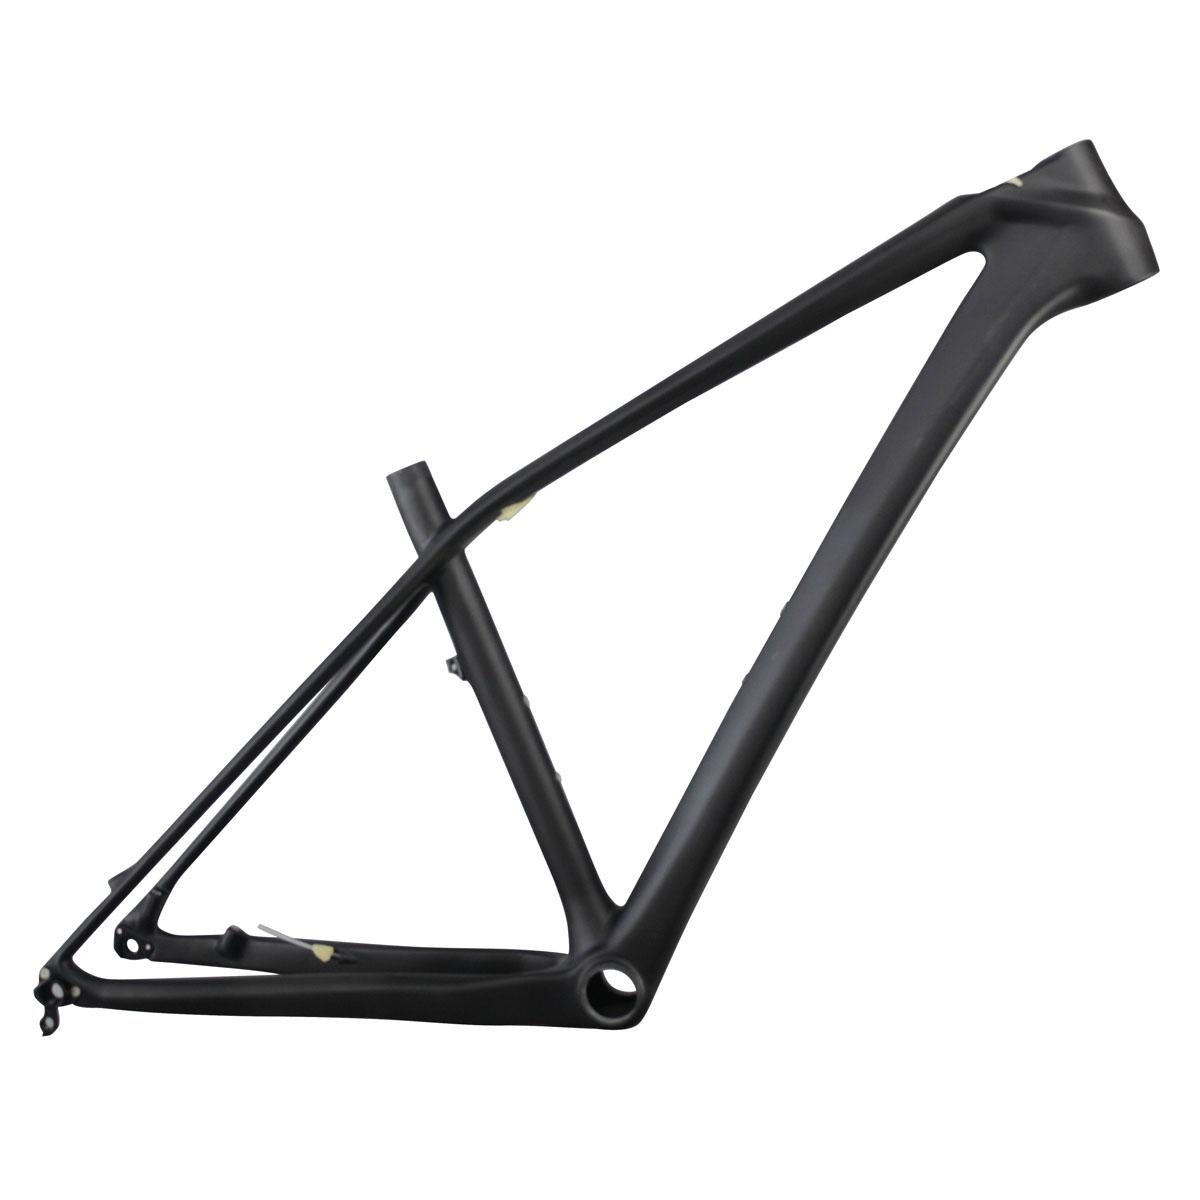 27.5er Carbon Hardtail Mountain Bicycle Frame 